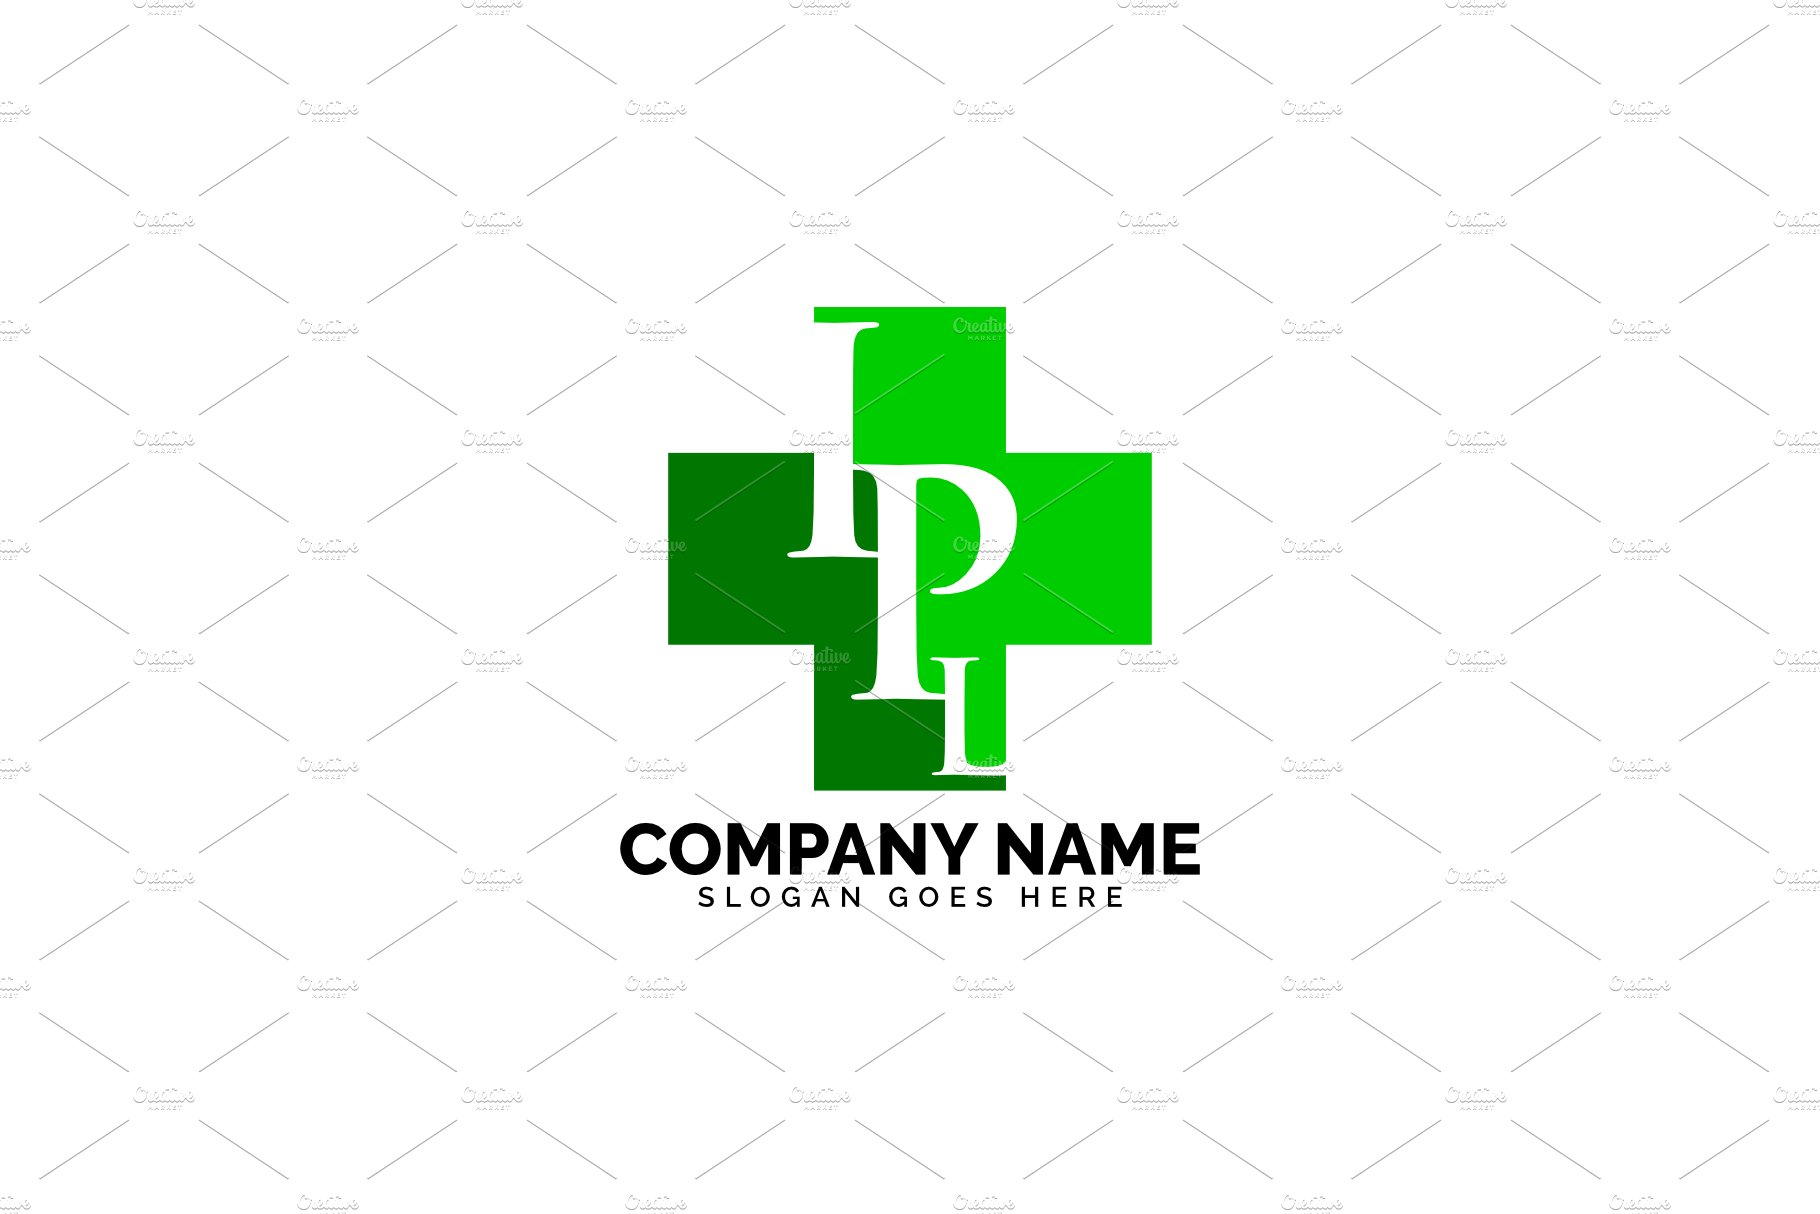 ipl letter hospital logo cover image.